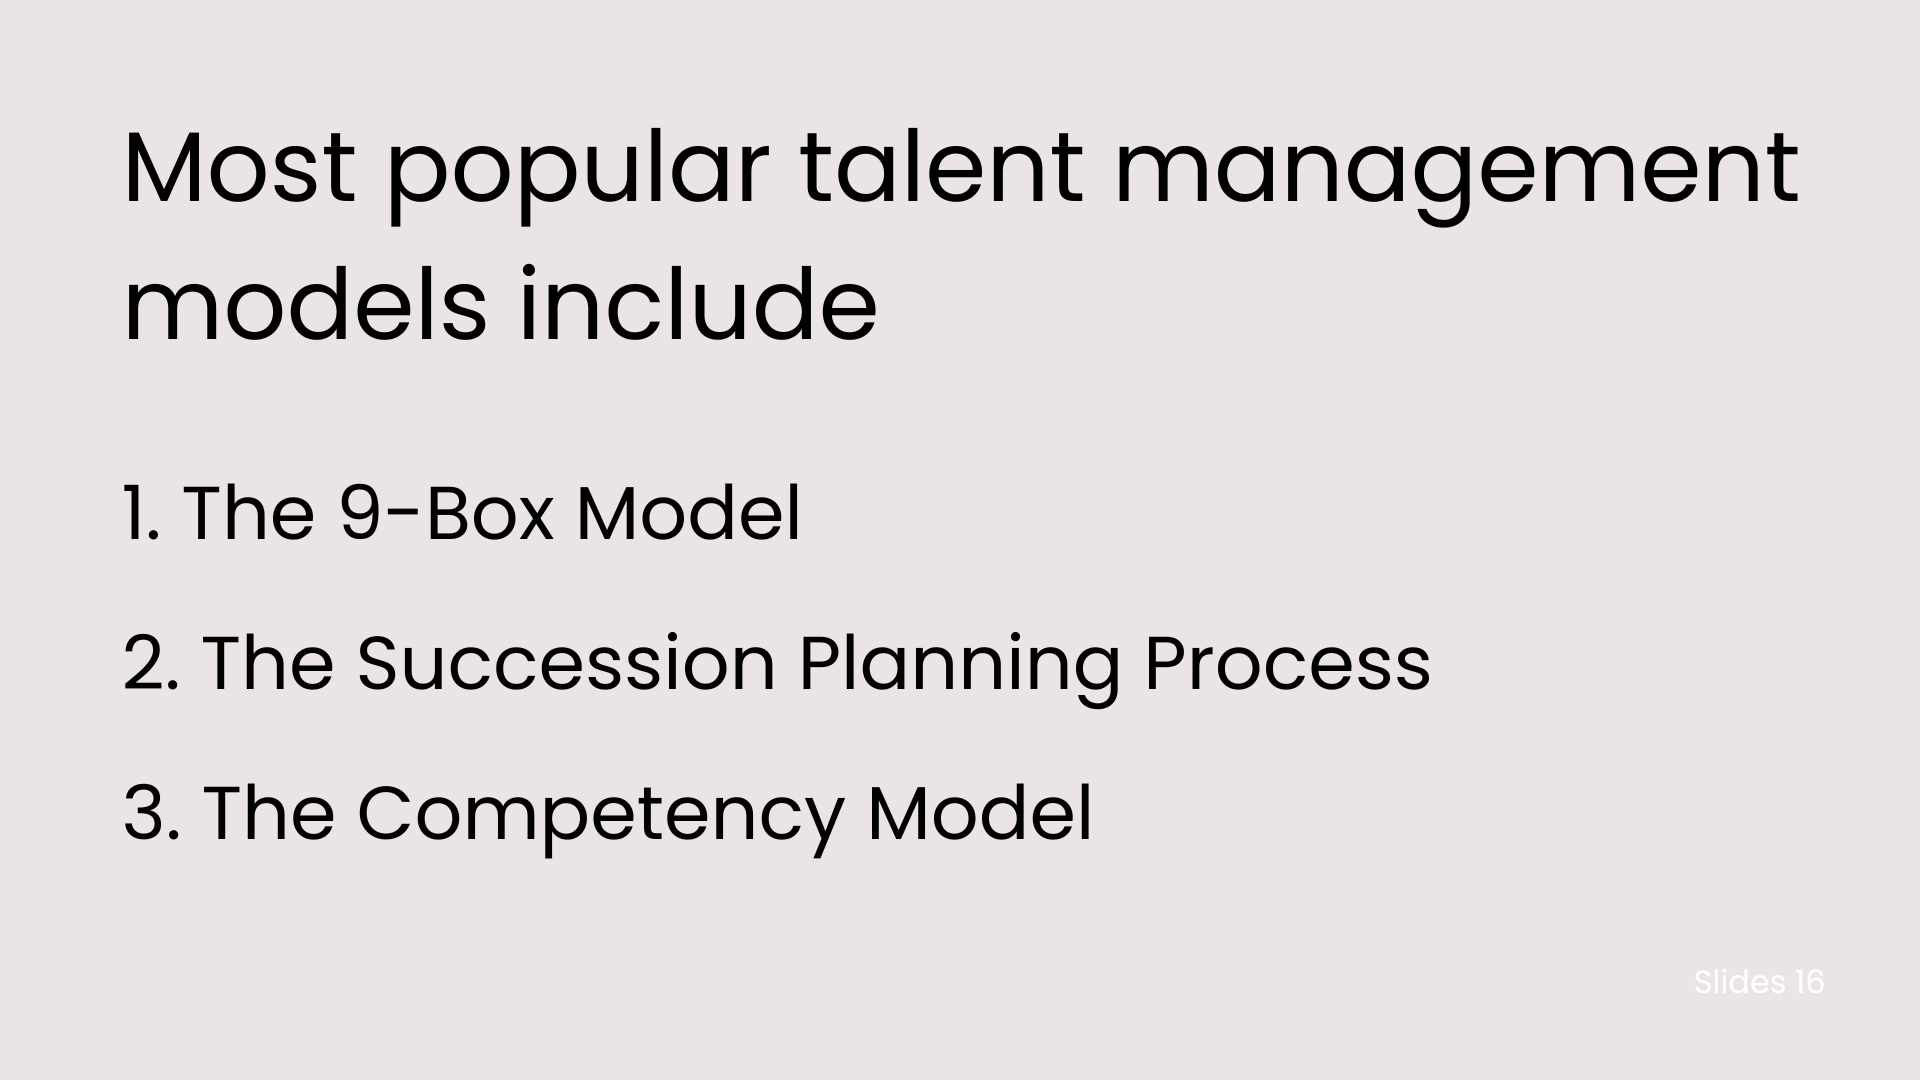 Most popular talent management models include